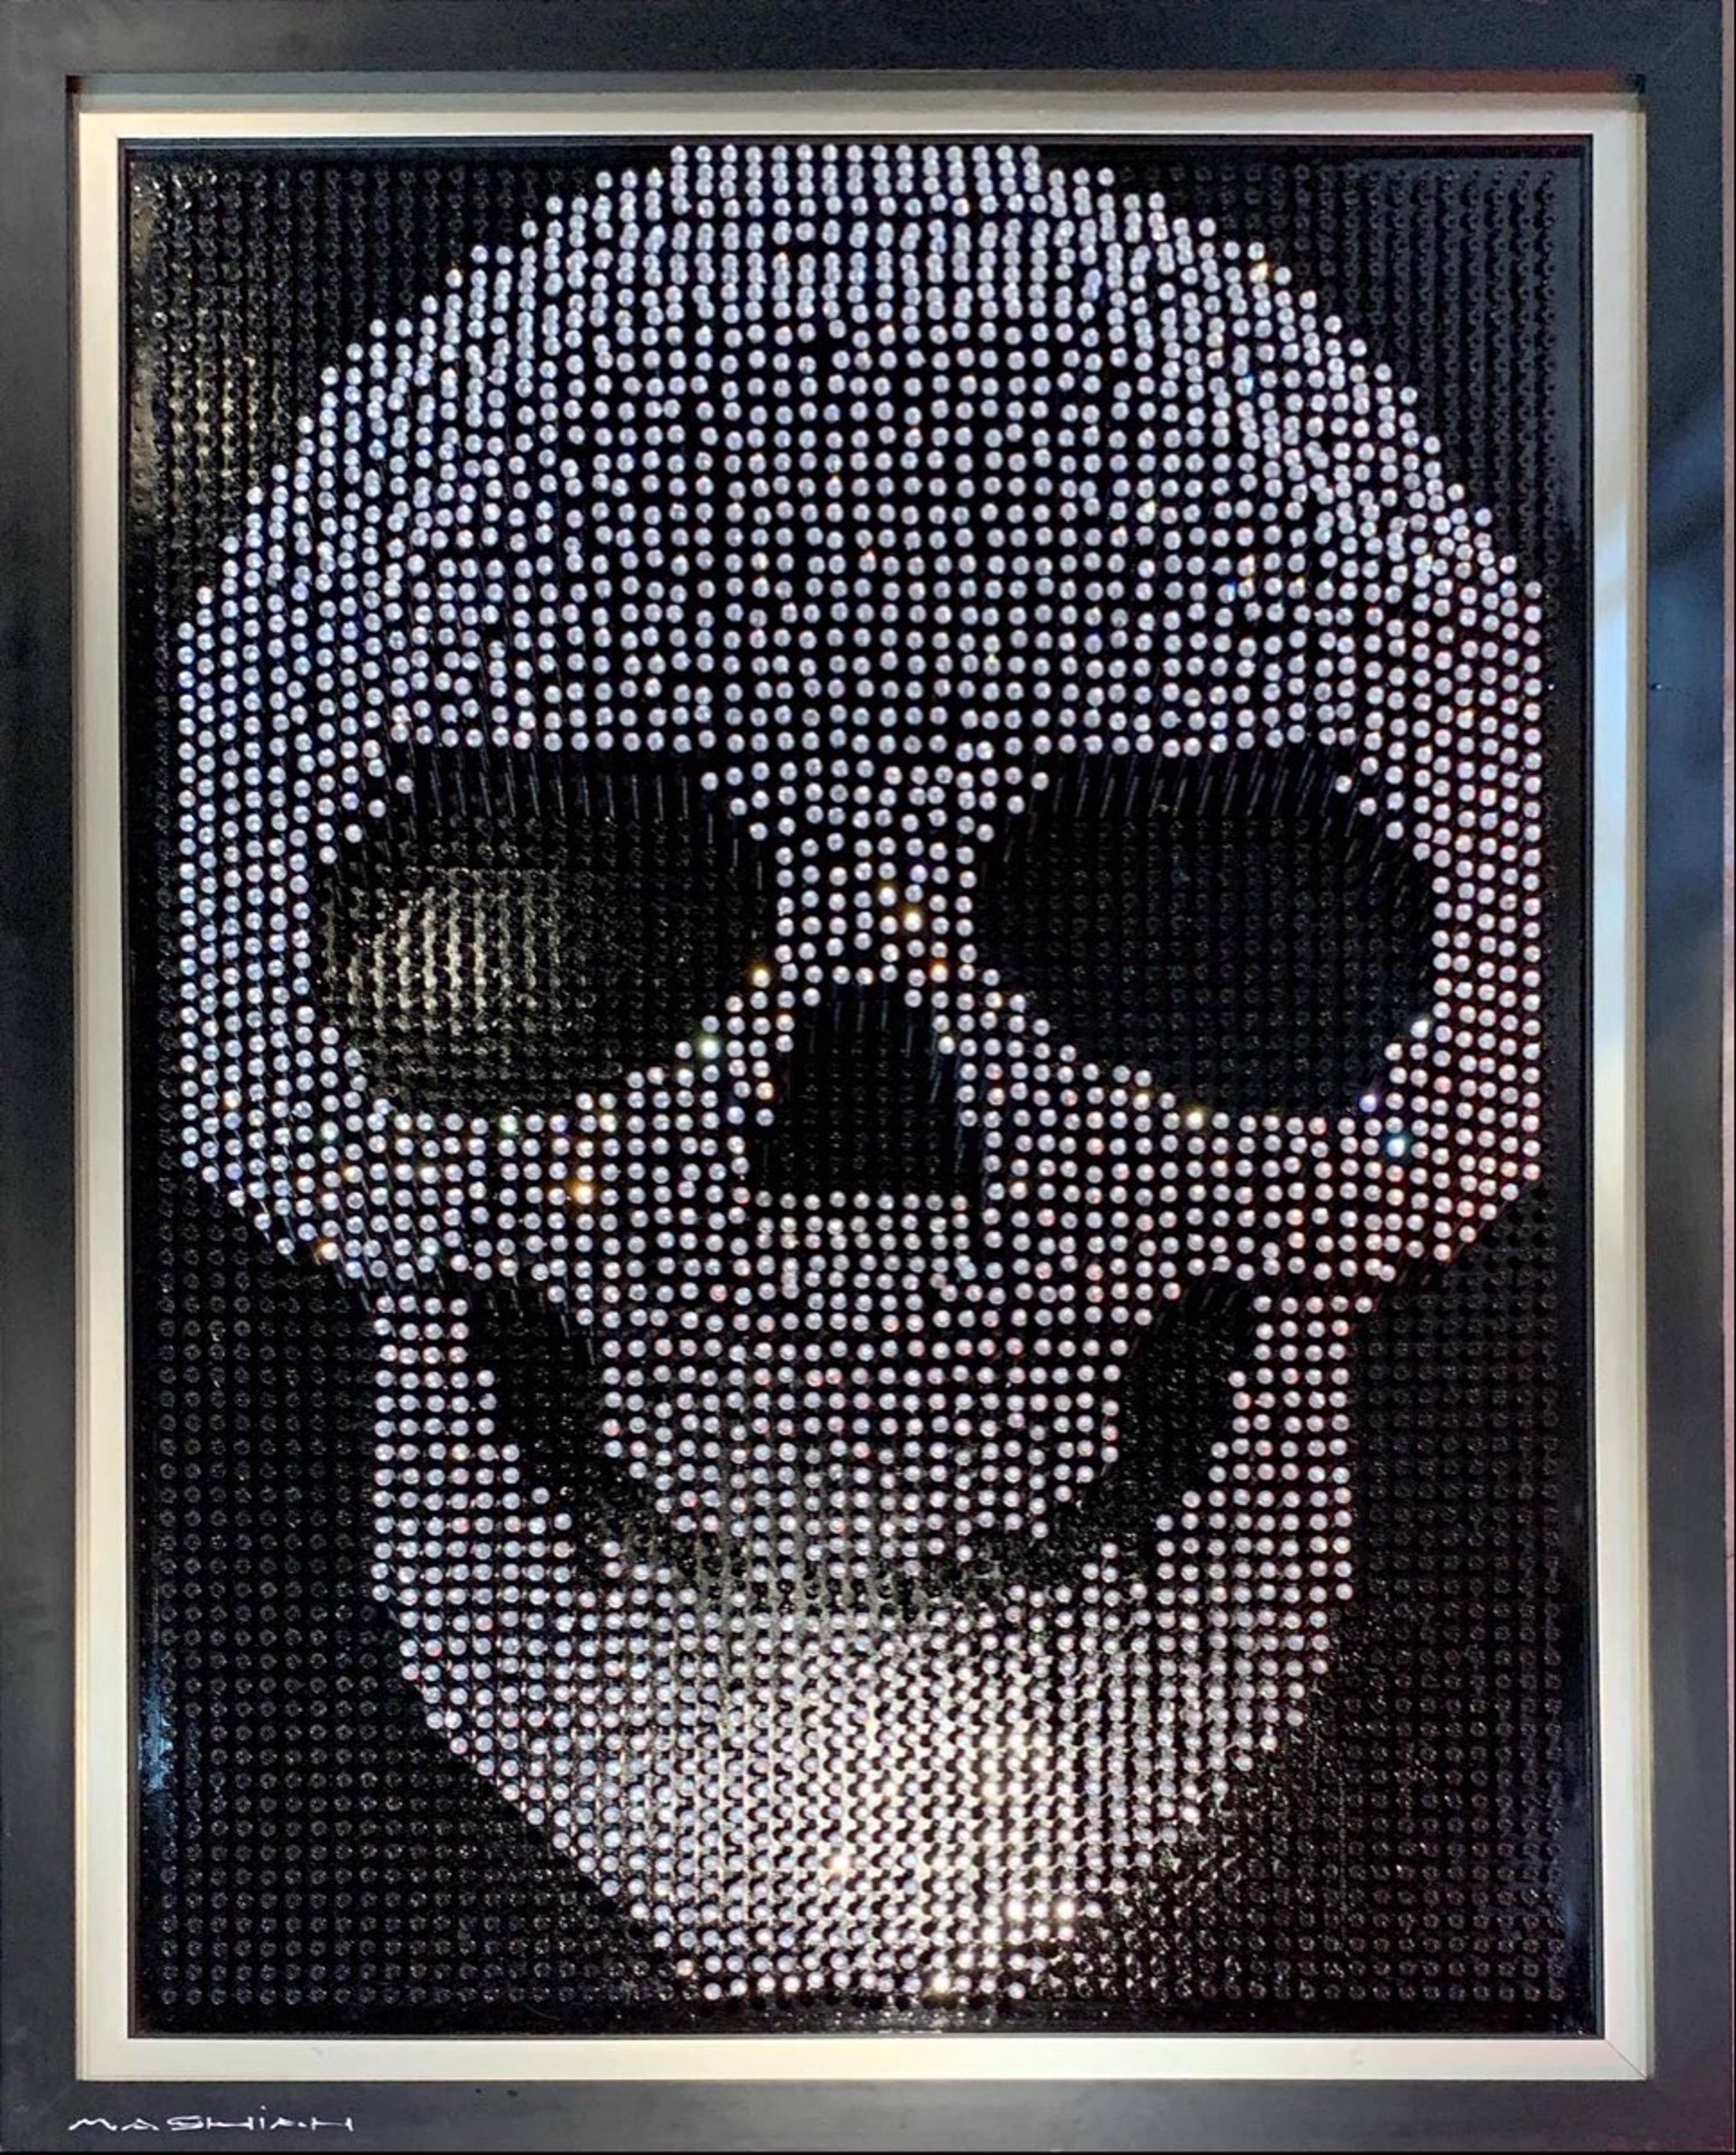 "Skull" by "Screw Art Board" by Efi Mashiah